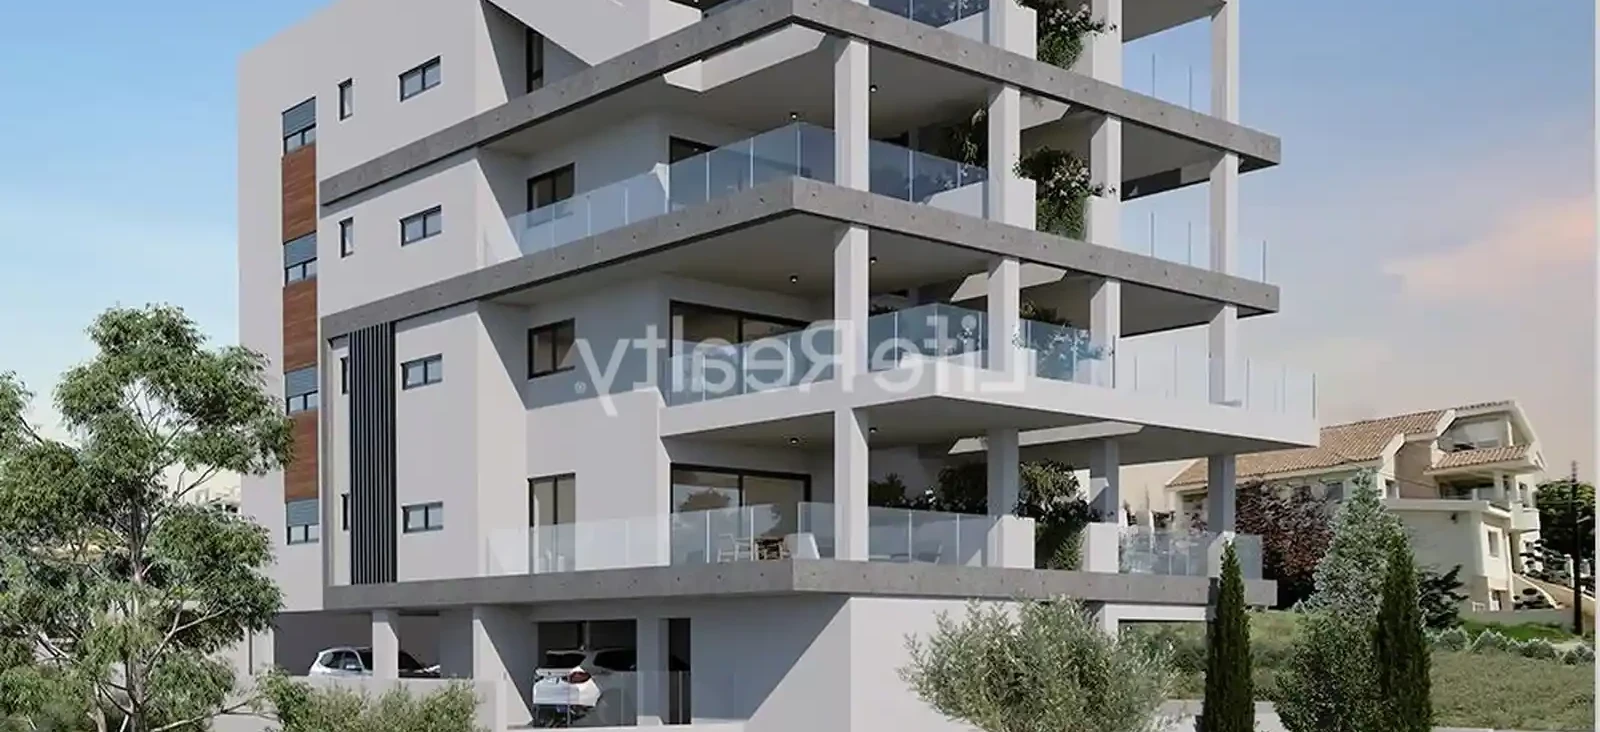 2-bedroom penthouse fоr sаle €430.000, image 1